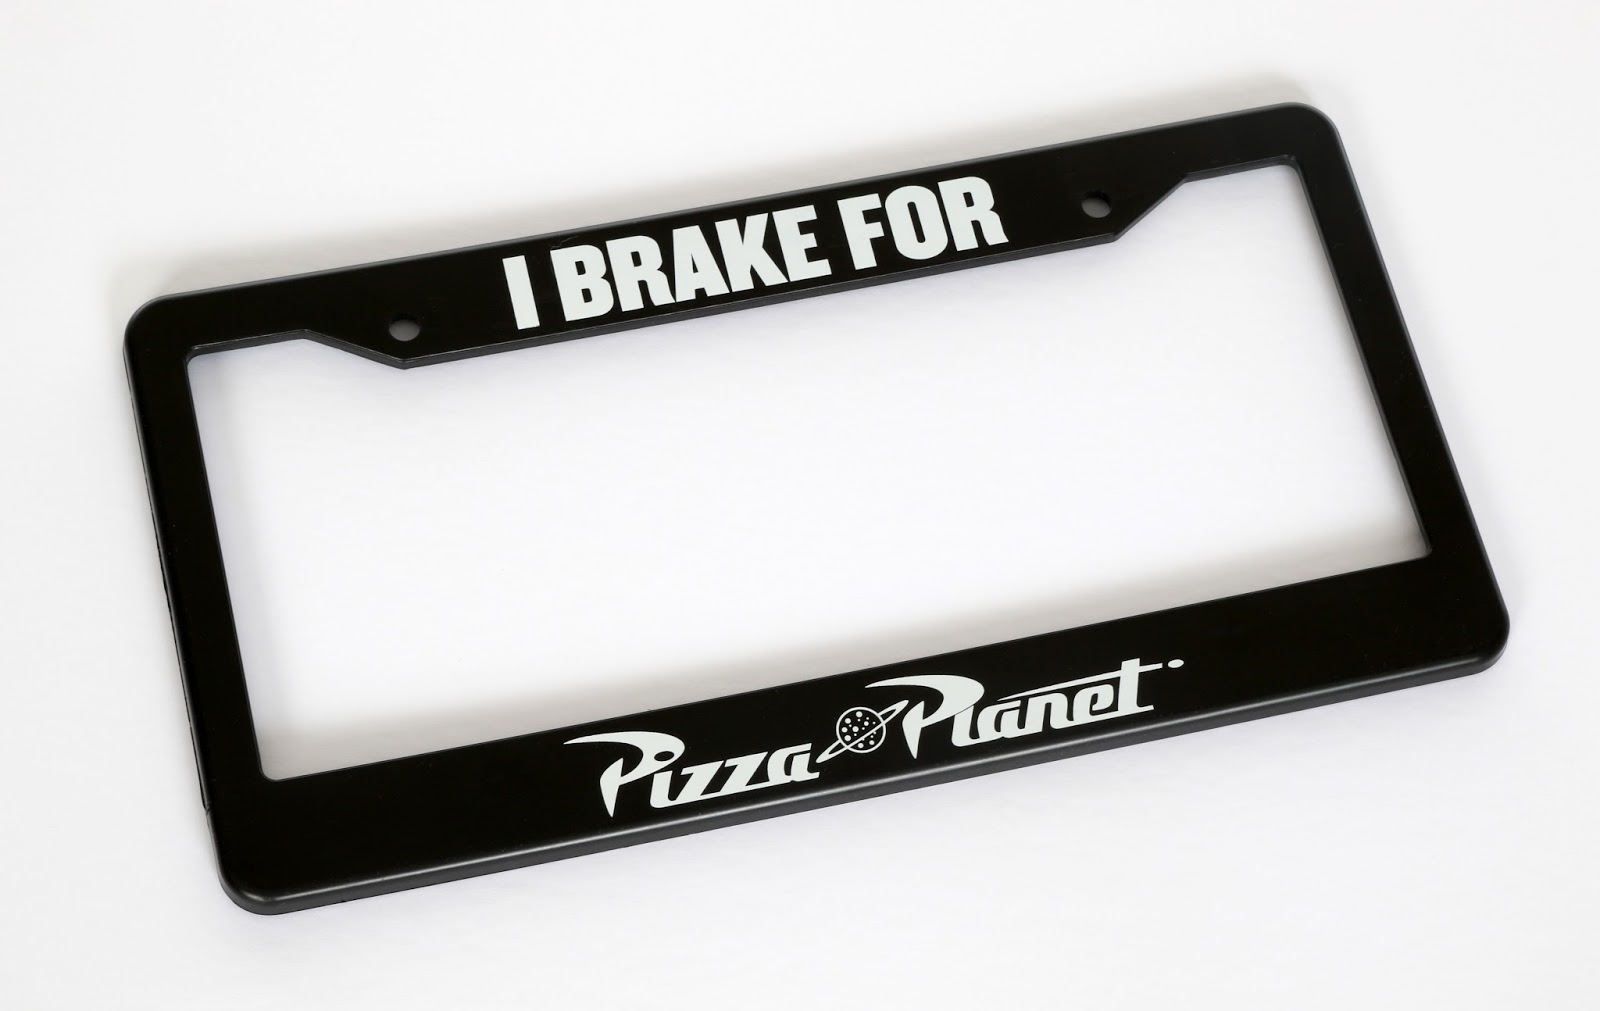 disney pixar pizza planet license plate frame cover 